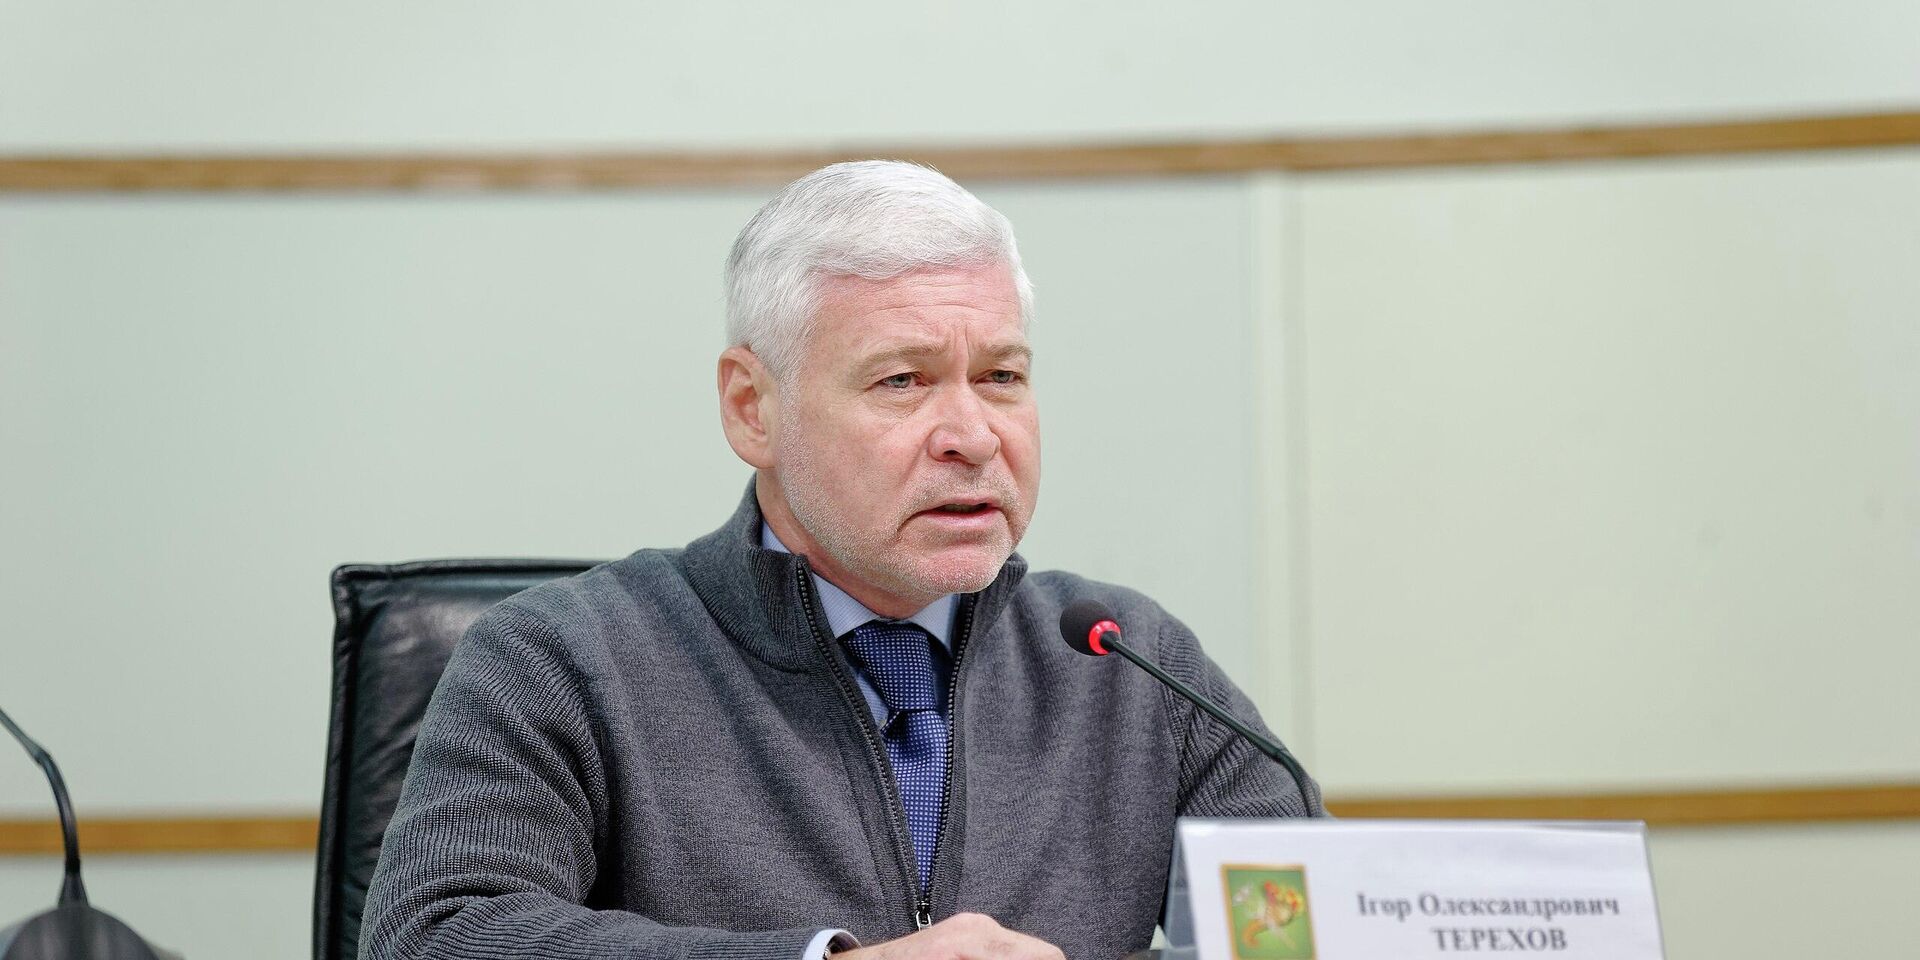 Igor Terehov